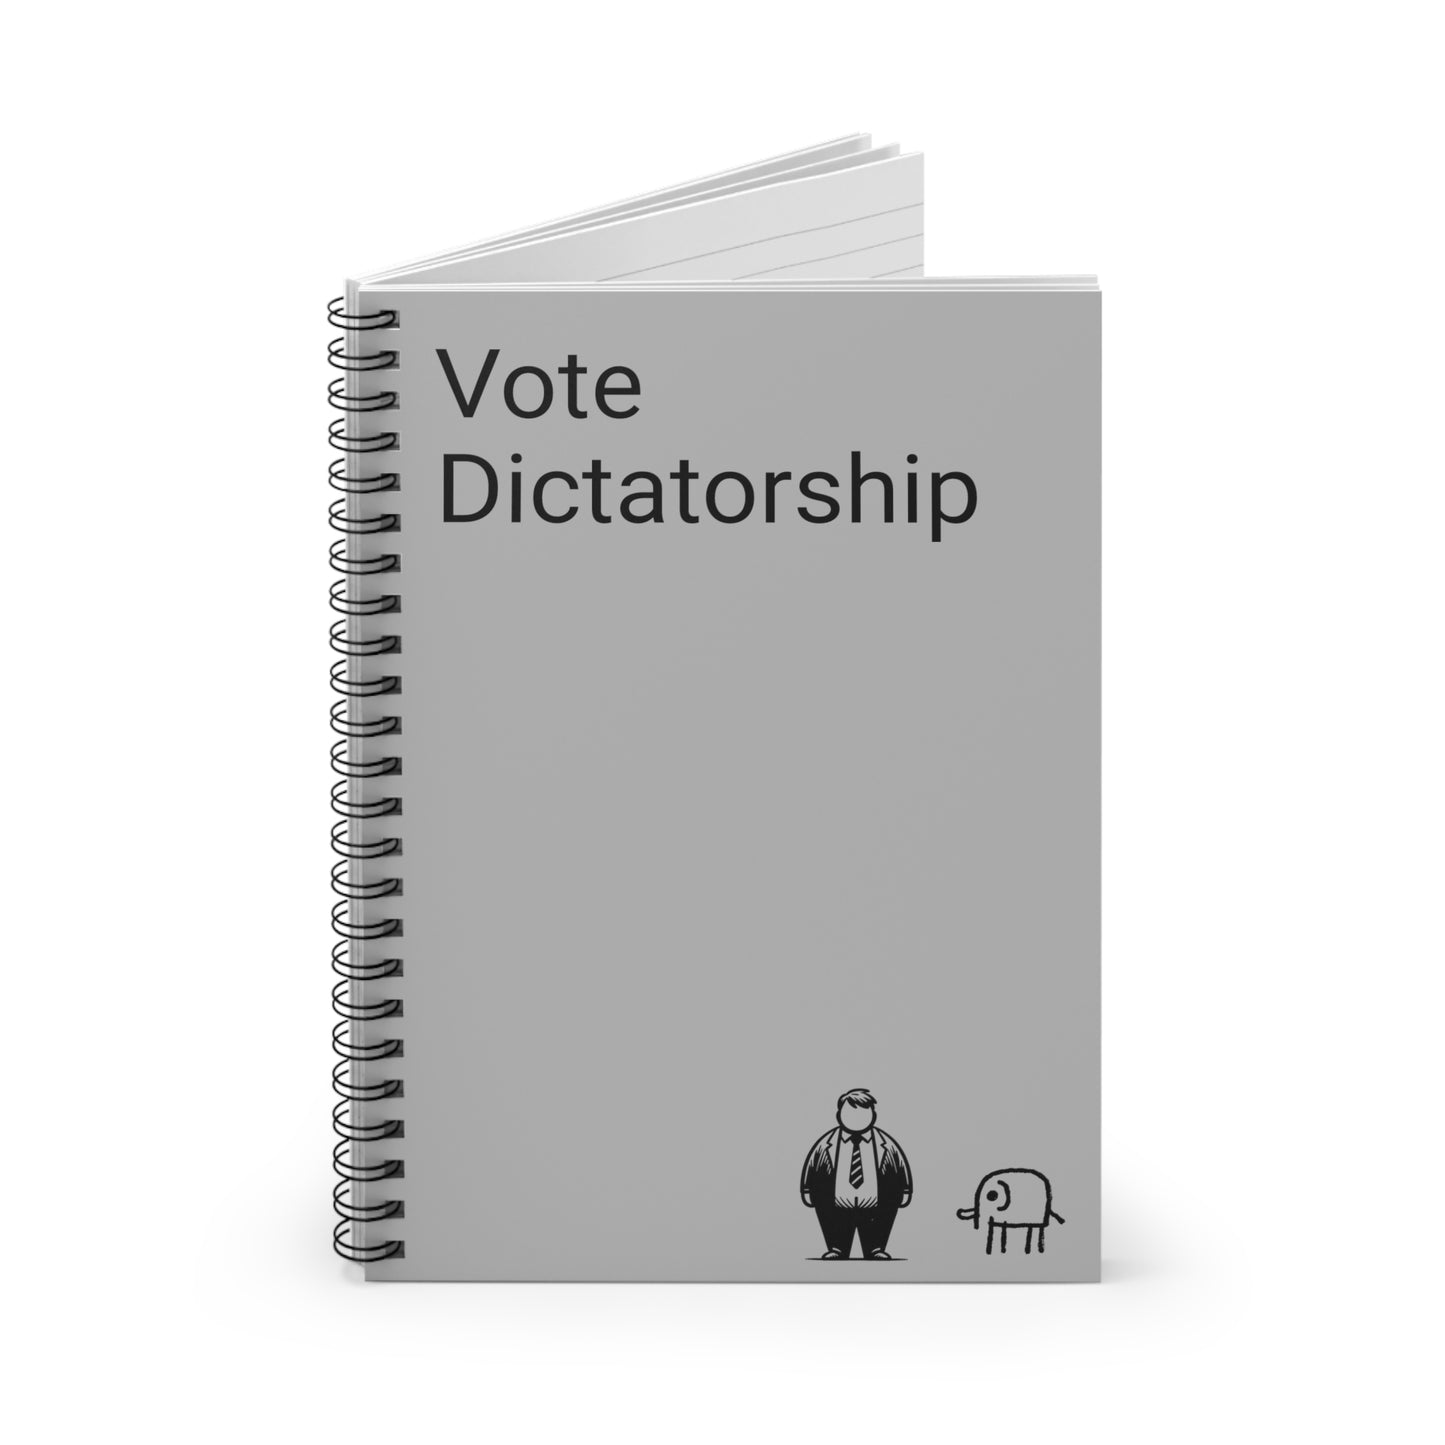 Vote Dictatorship Notebook